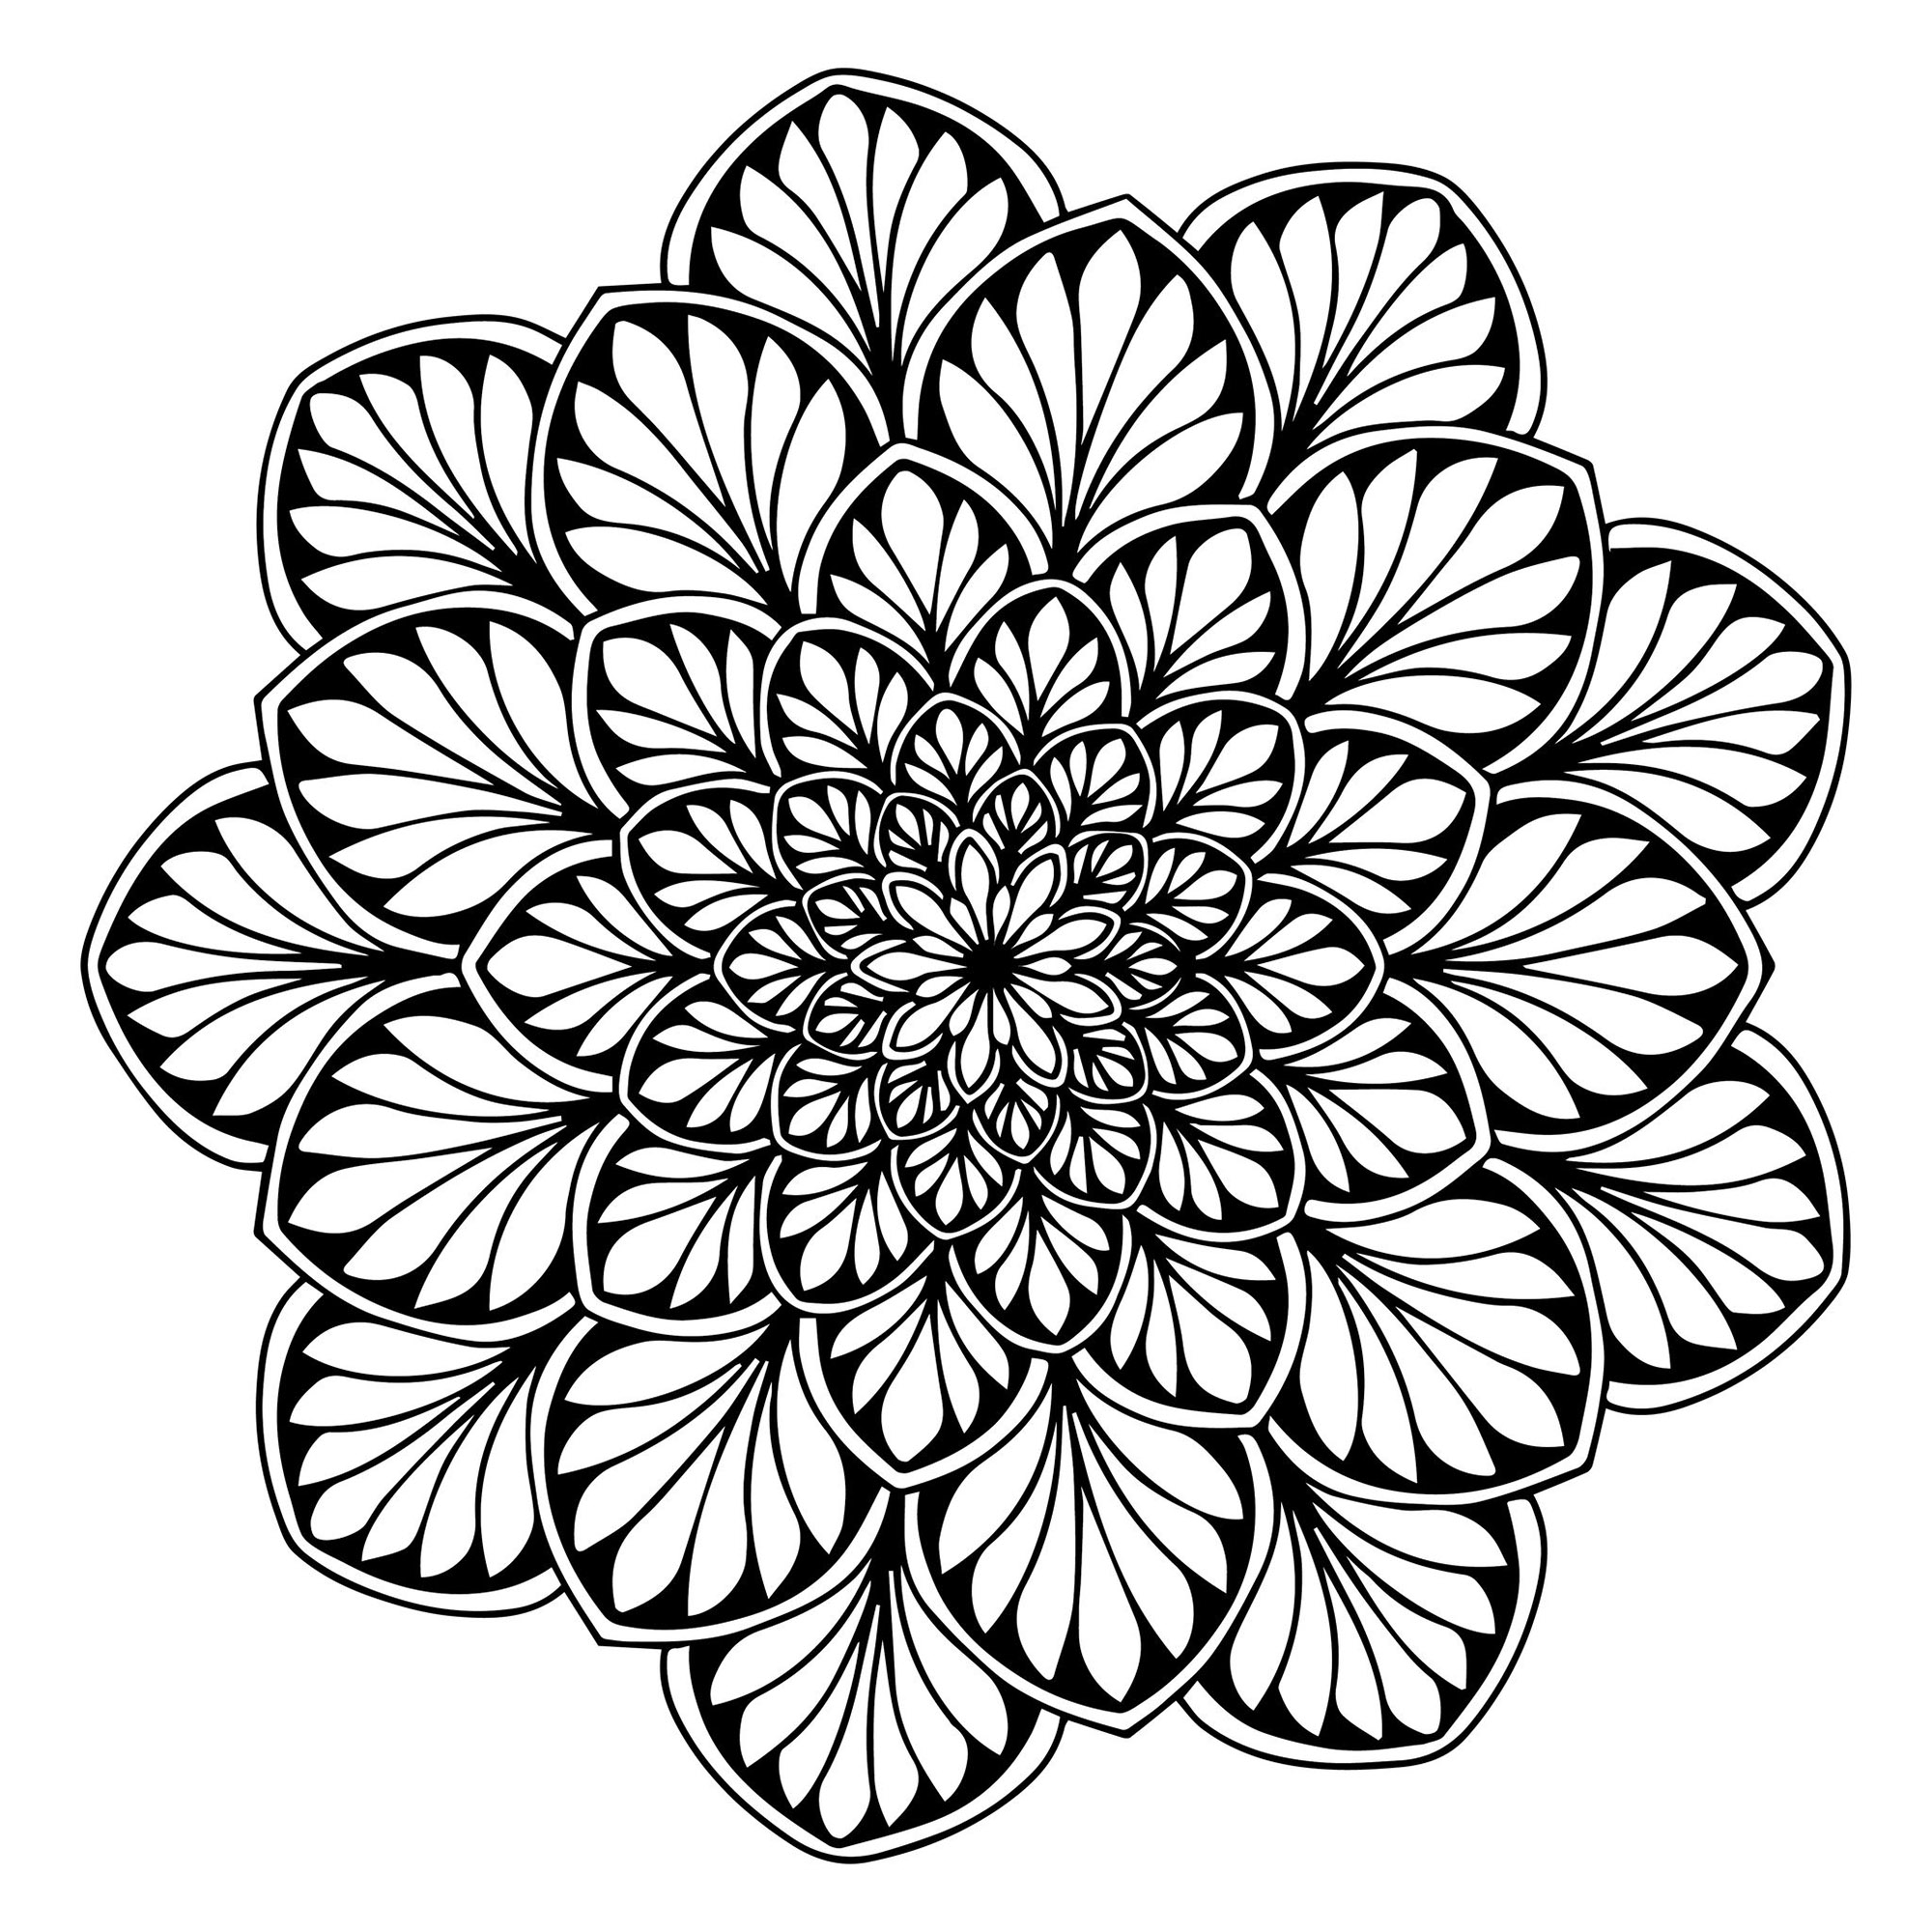 Mandala mit symmetrischen, regelmäßigen Blättern